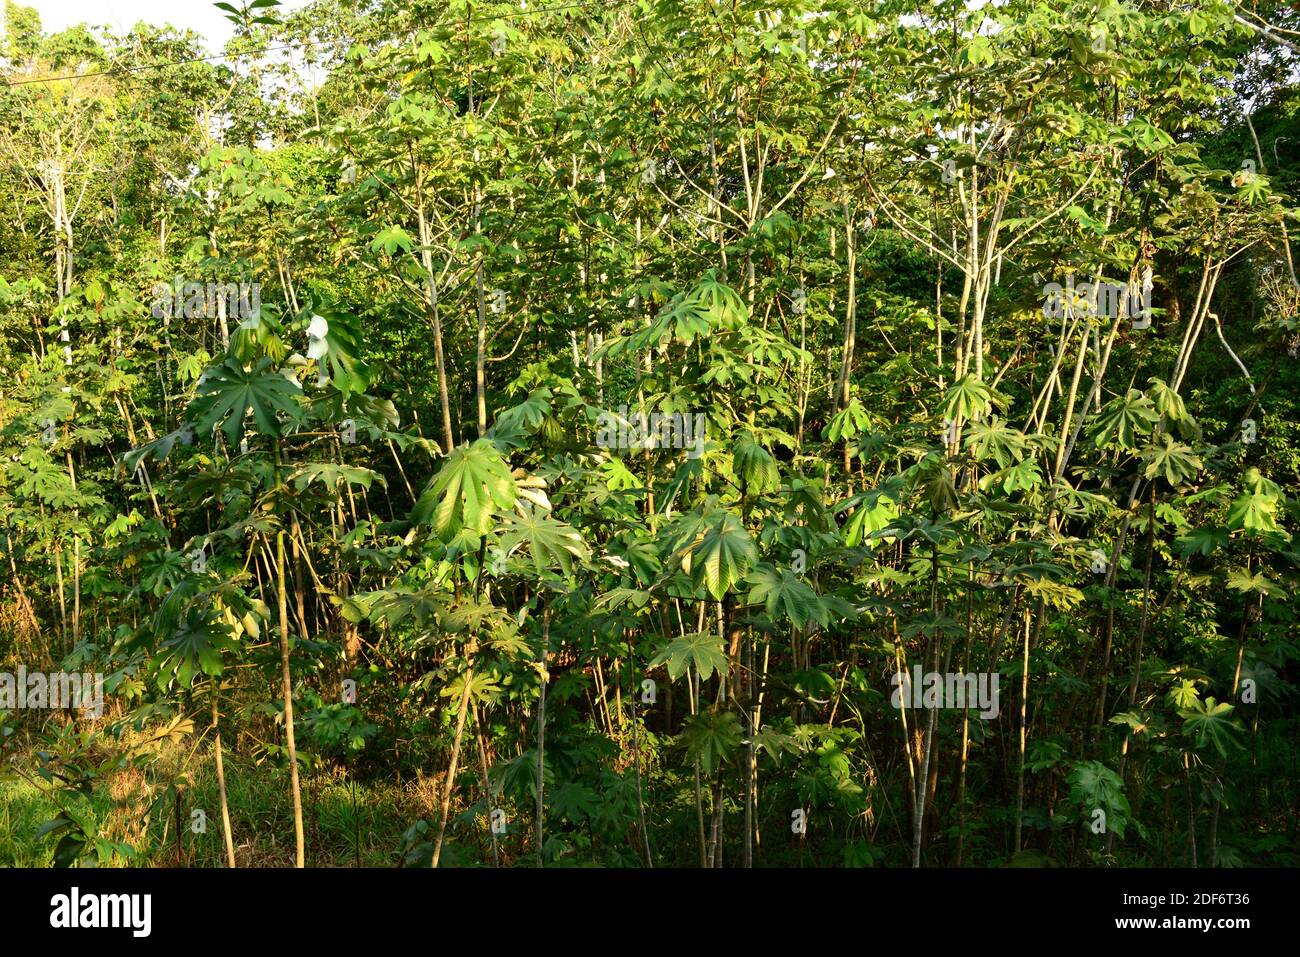 Snakewood (Cecropia peltata) is an evergreen invasive tree native to tropical Americas. This photo was taken near Manaus, Brazil. Stock Photo